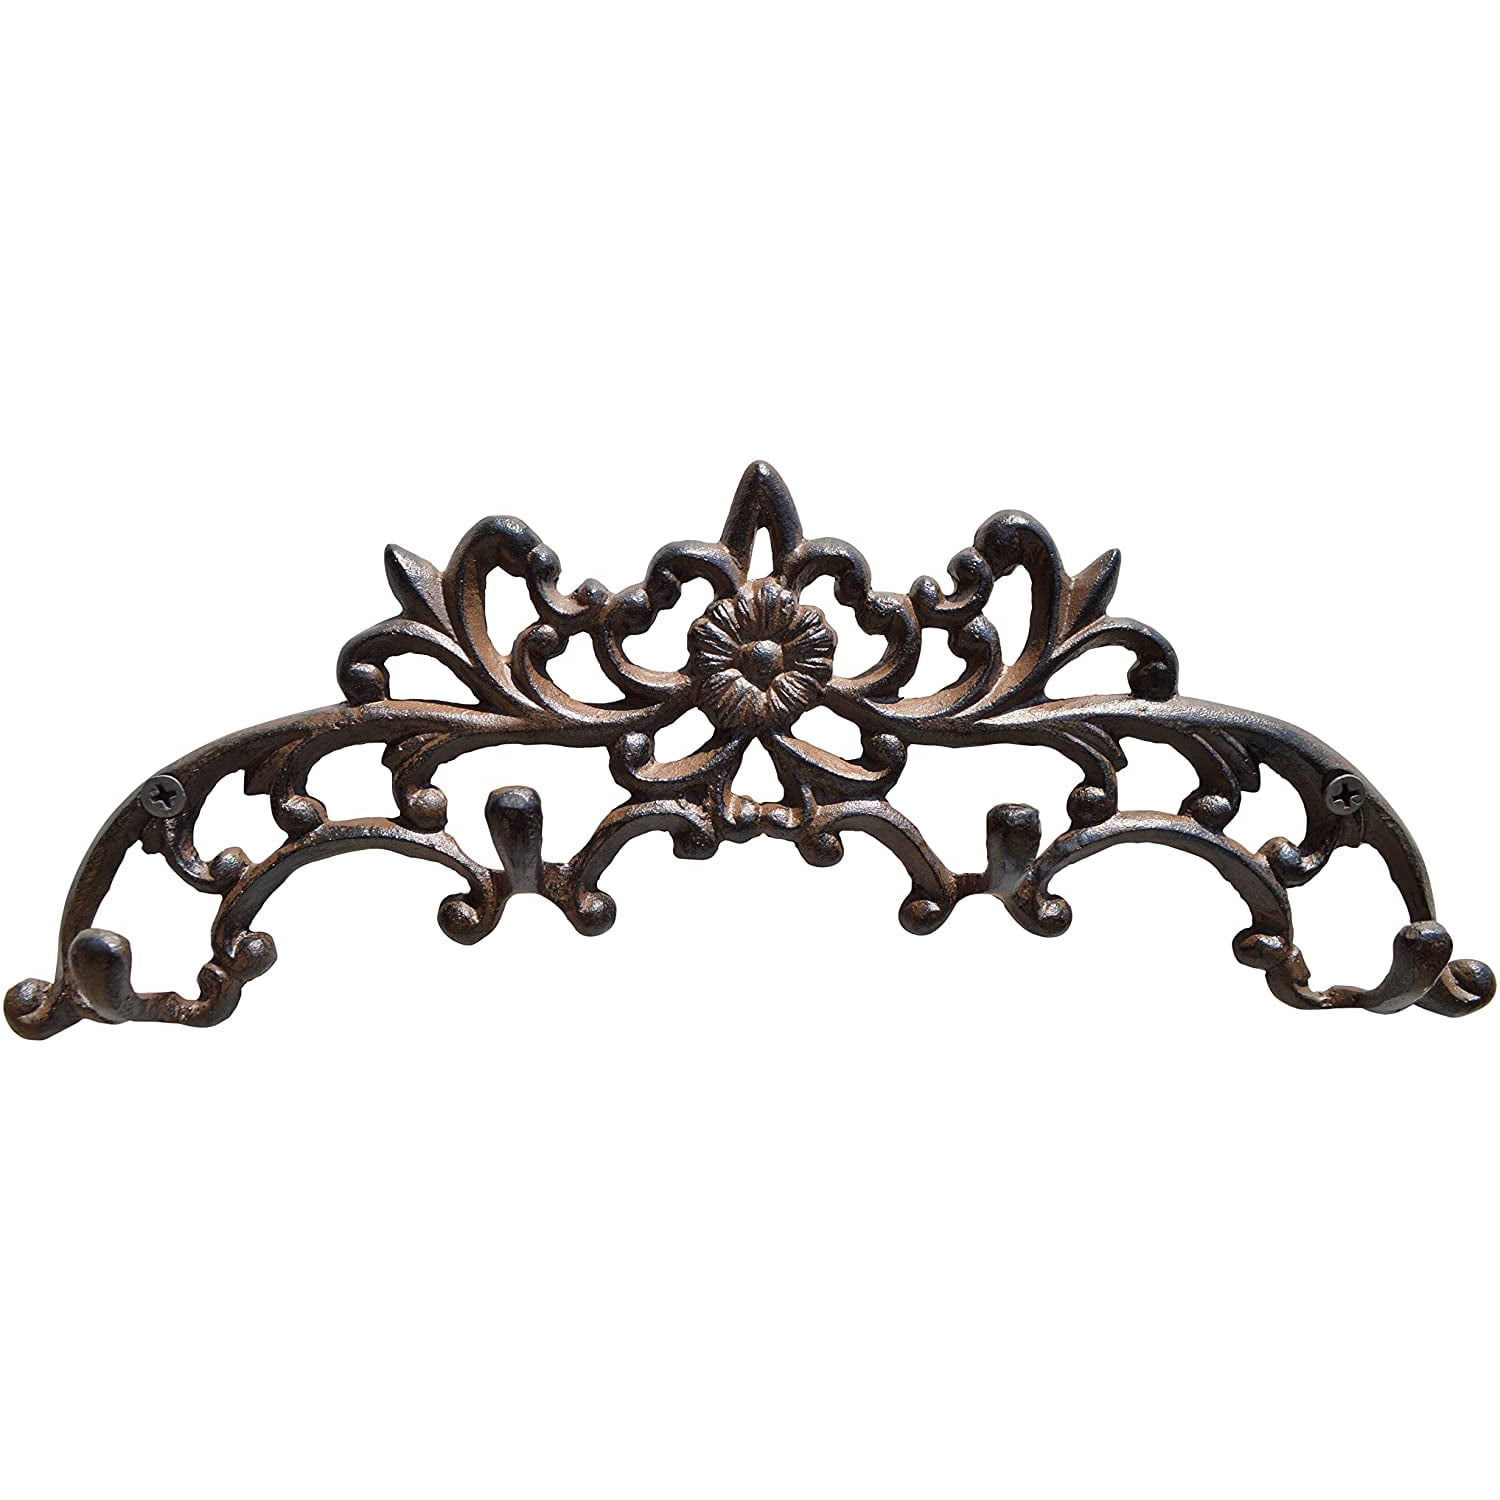 1 Pc Key Holder Rustic Cast Iron Decorative 4 Key Hooks for Doorway Kitchen 